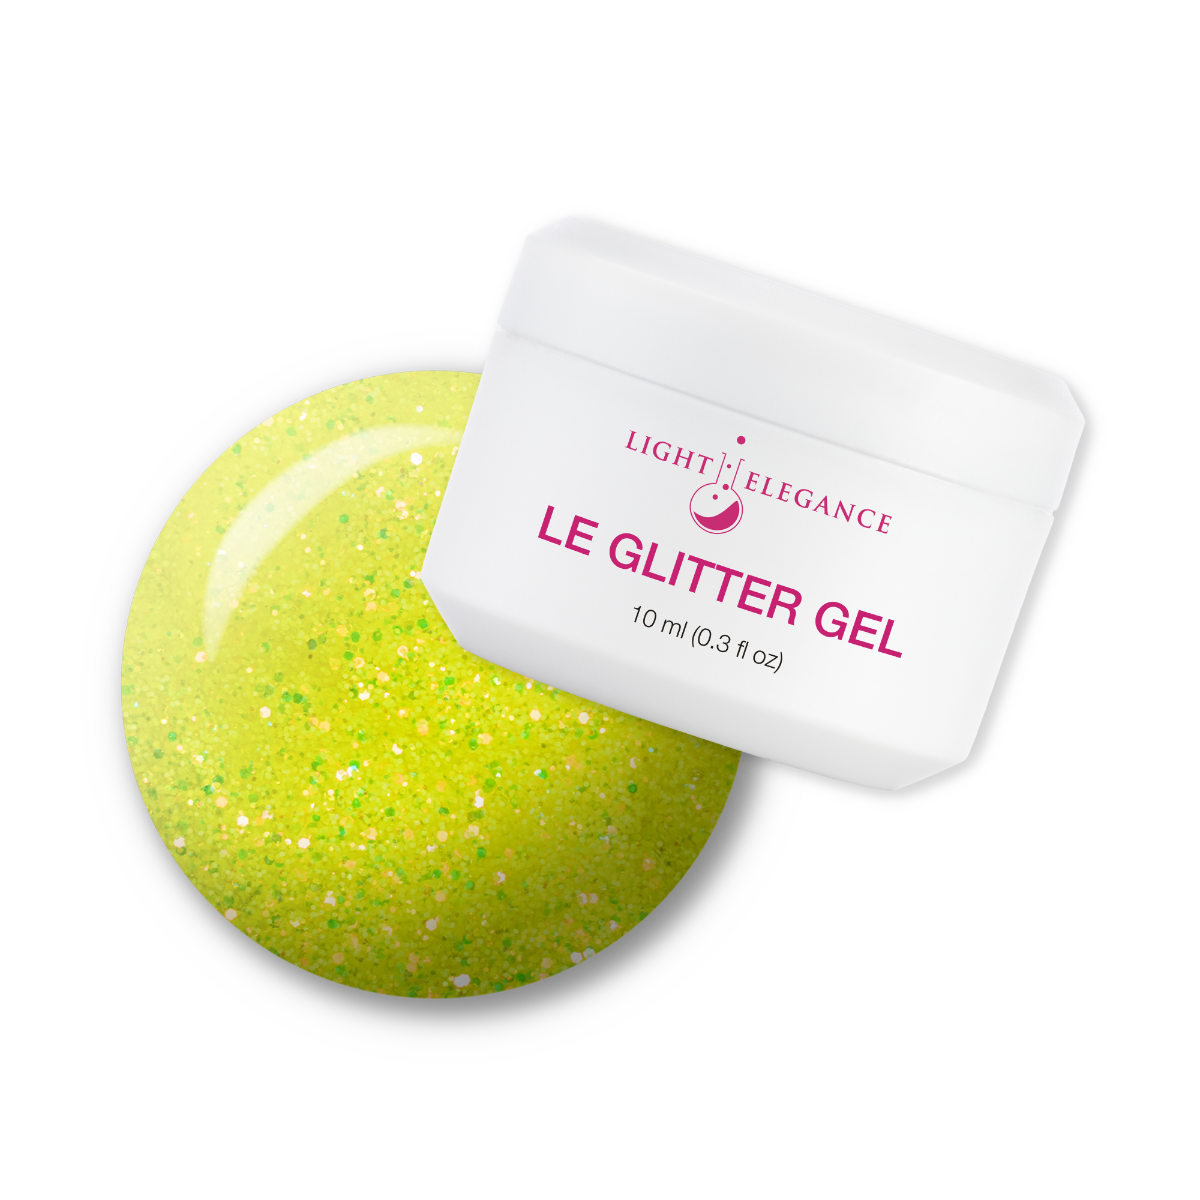 Light Elegance Glitter Gel - Bad Banana :: New Packaging - Creata Beauty - Professional Beauty Products